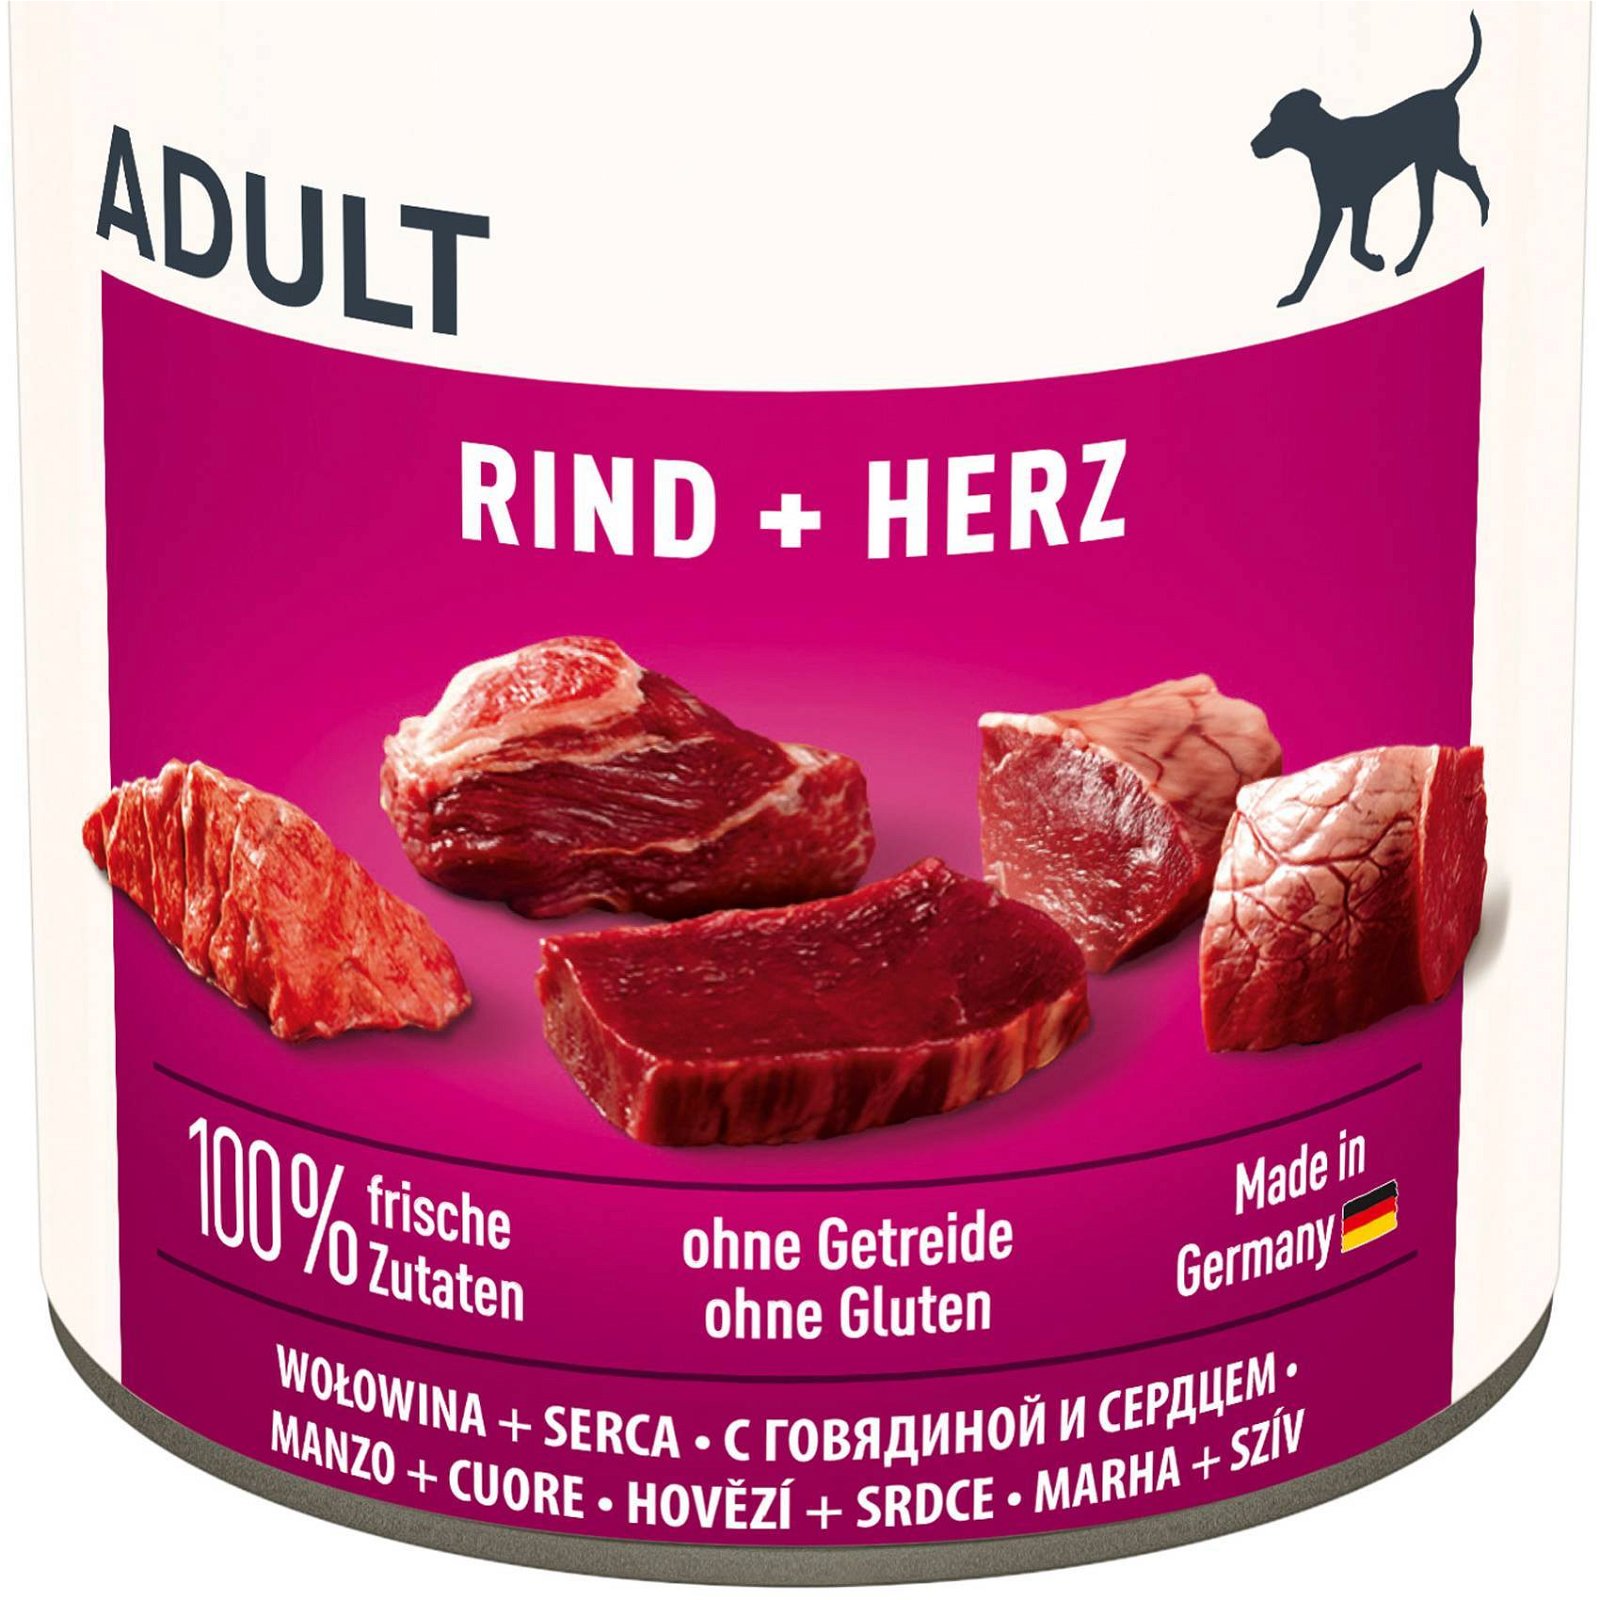 Animonda Gran Carno Adult Rind & Herz, 400 g